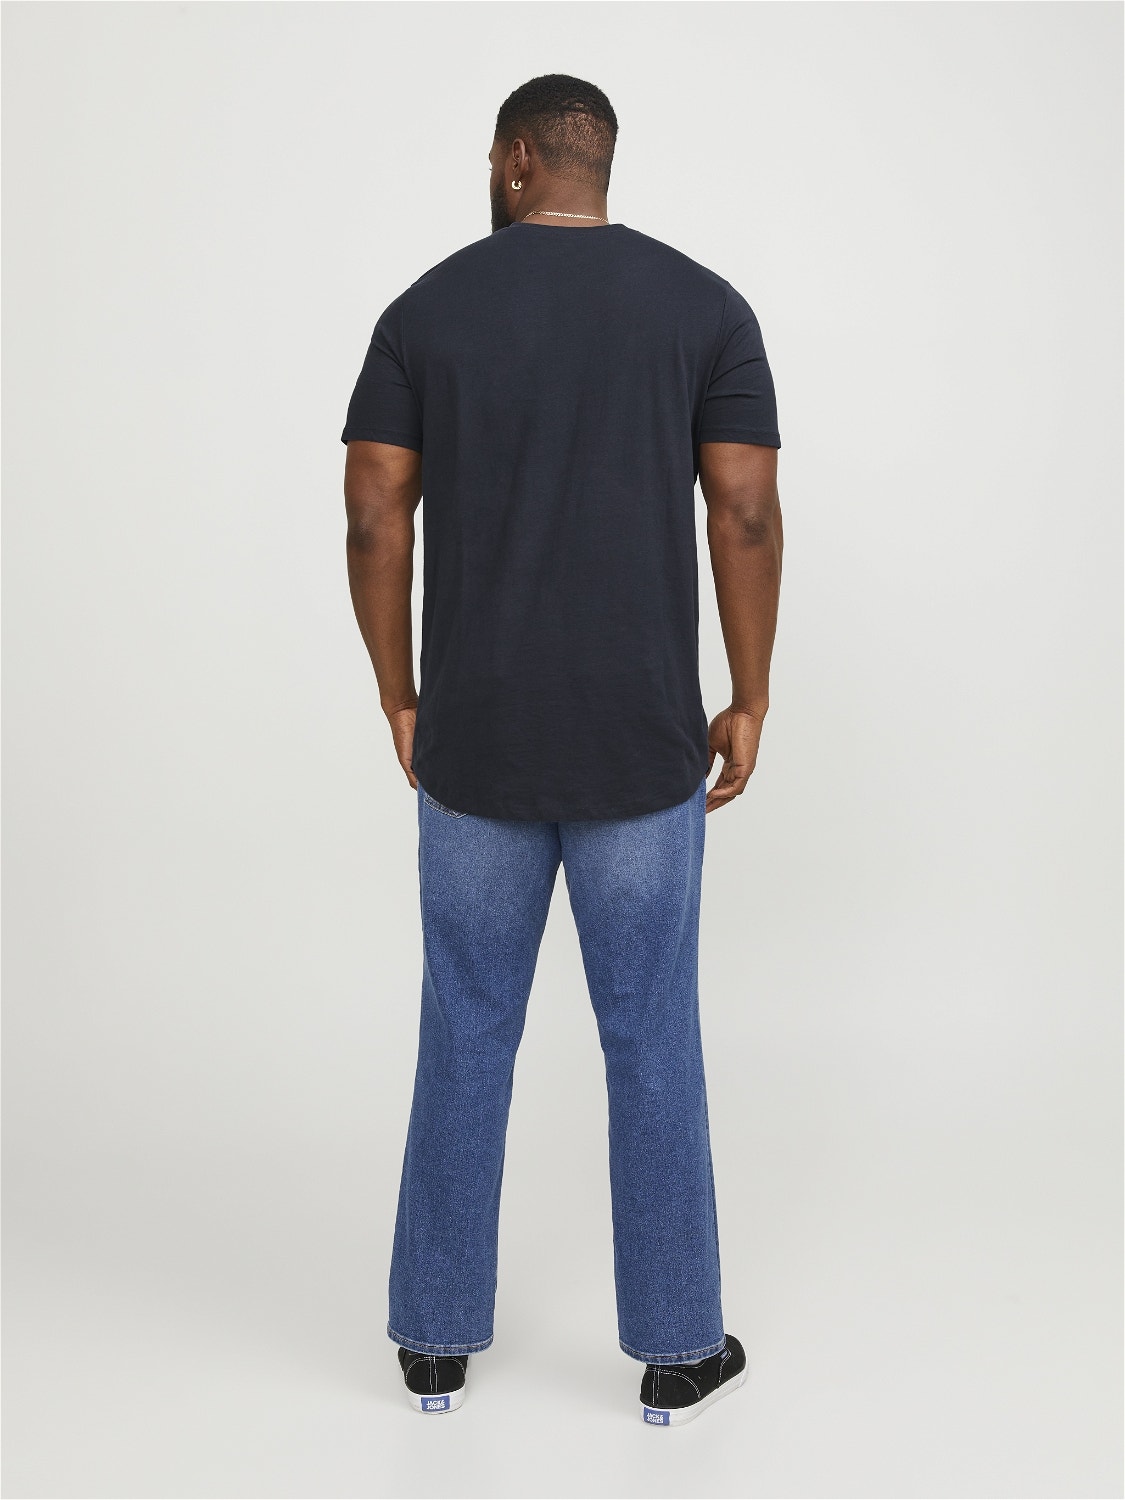 Jack & Jones Plus Size T-shirt Semplice -Navy Blazer - 12184933